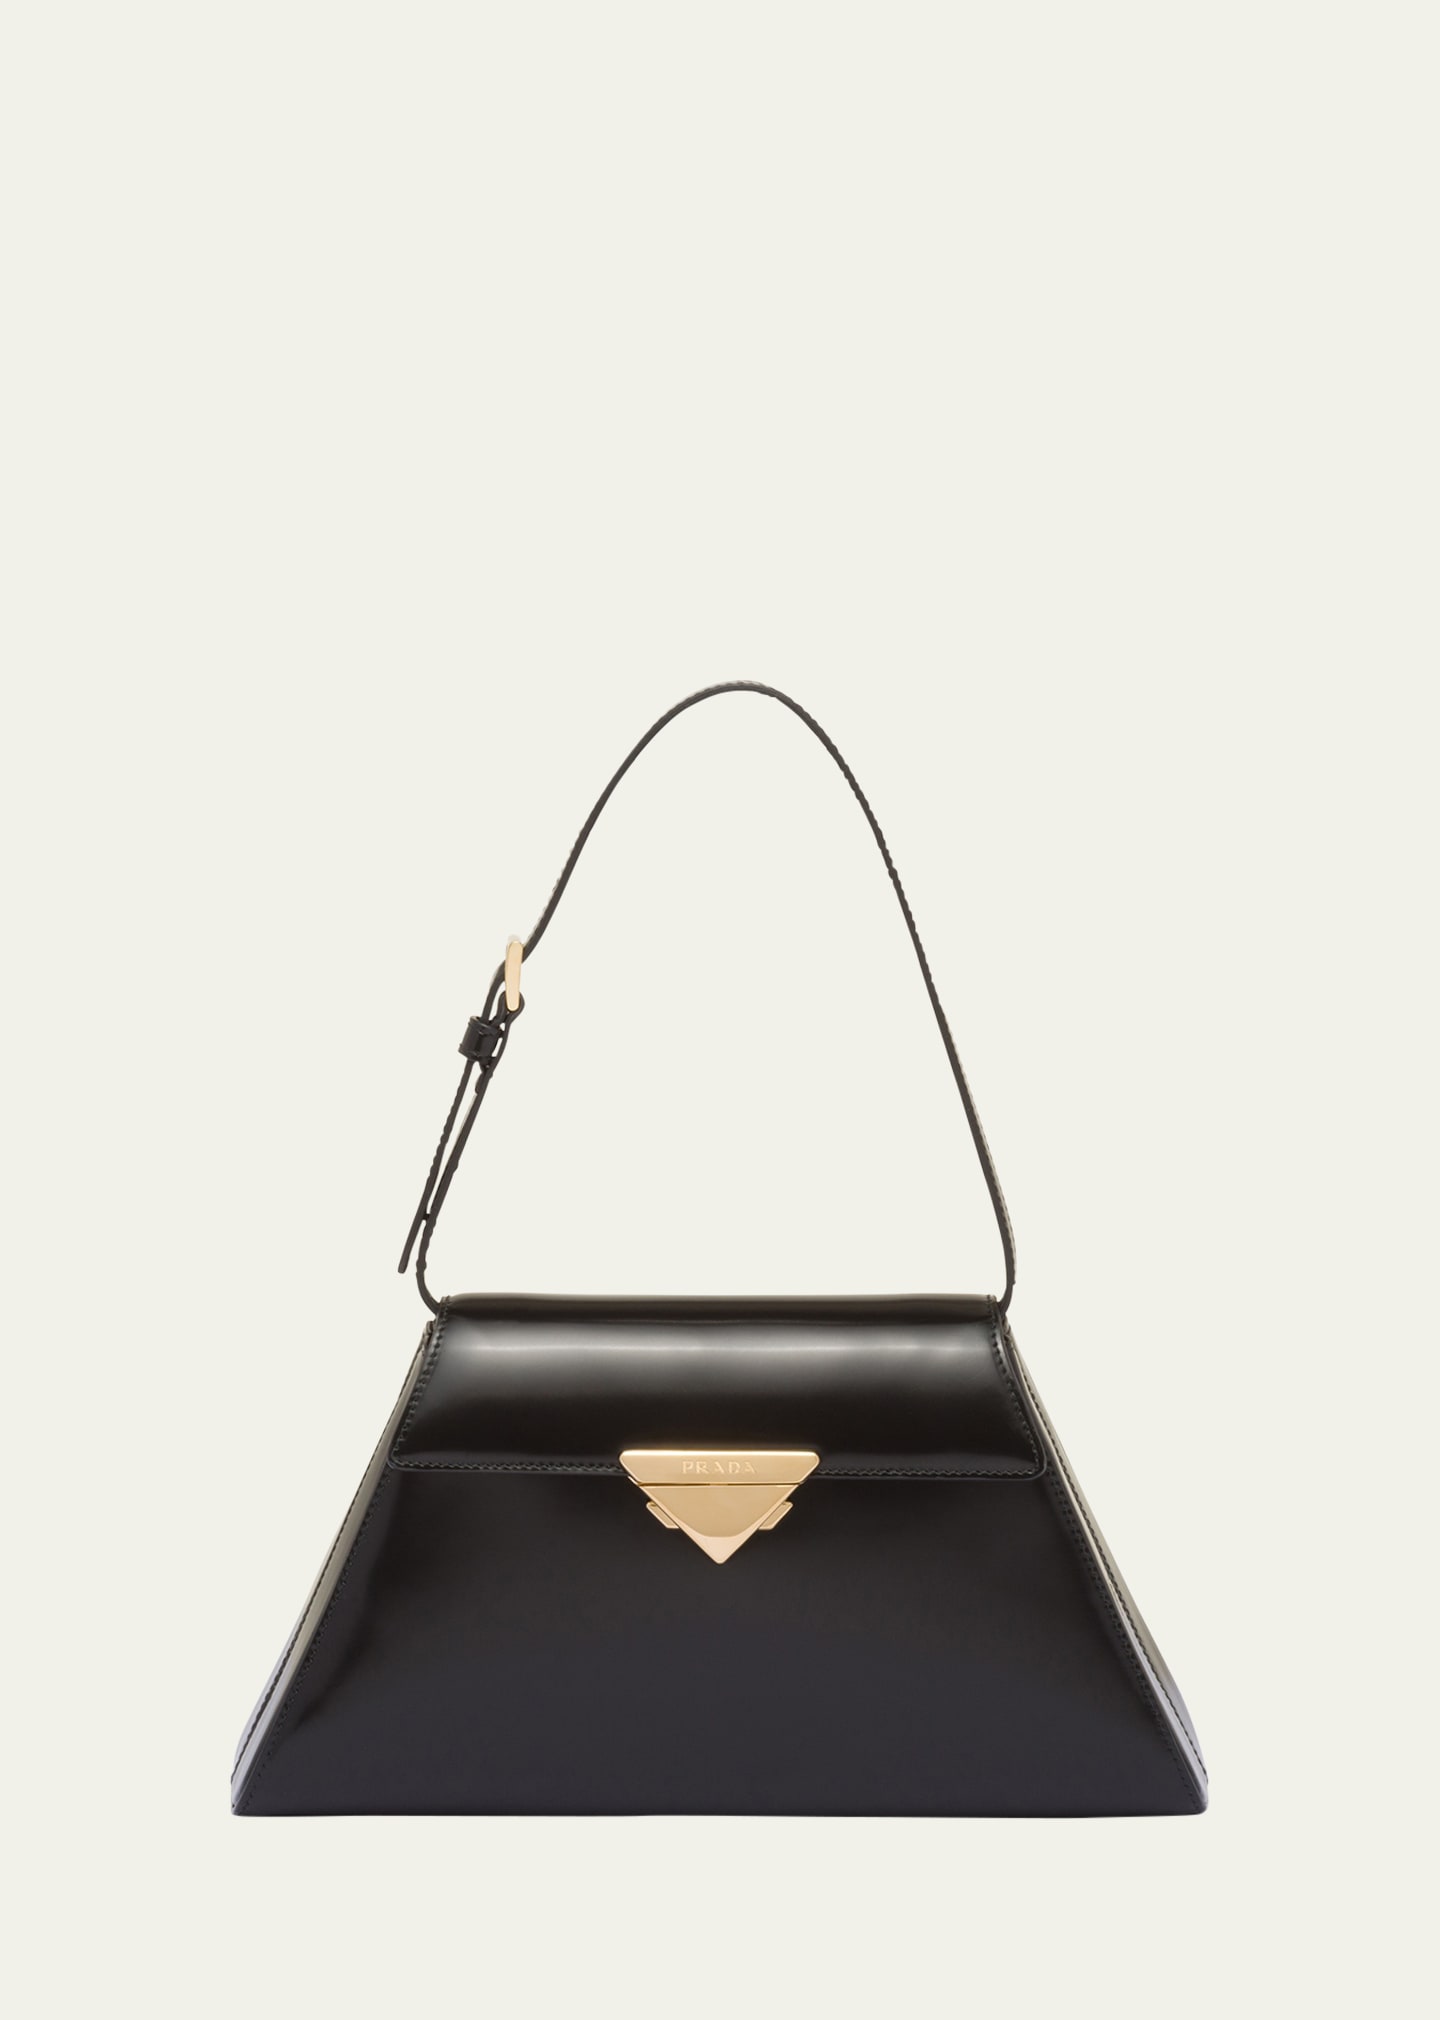 Prada Nylon Double-Zip Toiletry Bag, Black - Bergdorf Goodman